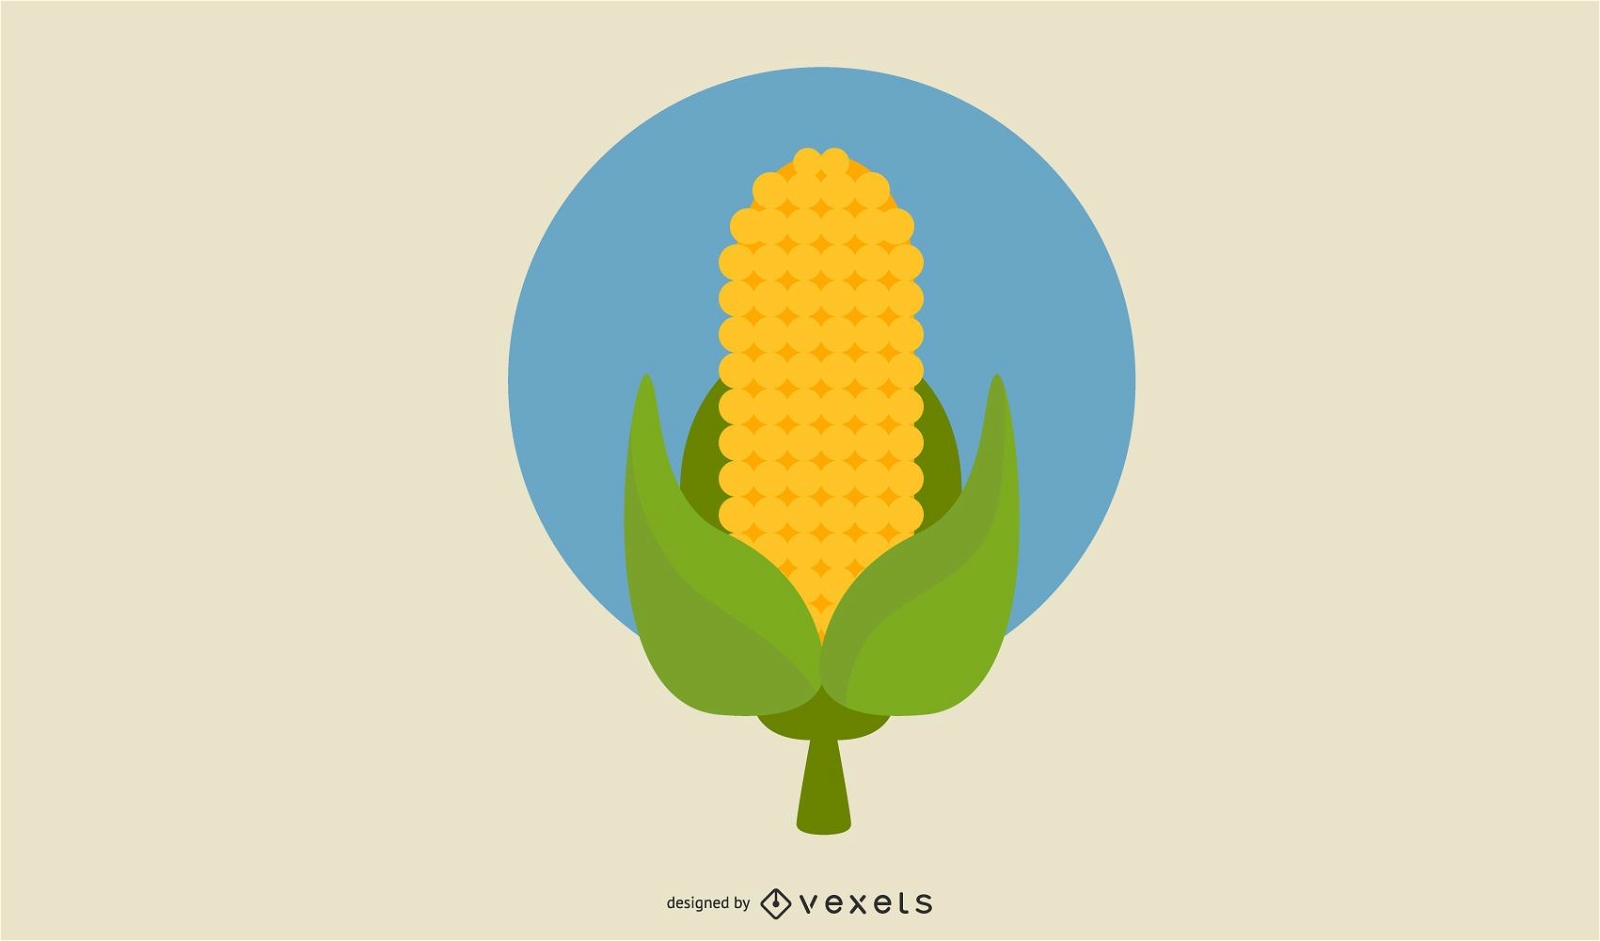 Maize crop illustration design